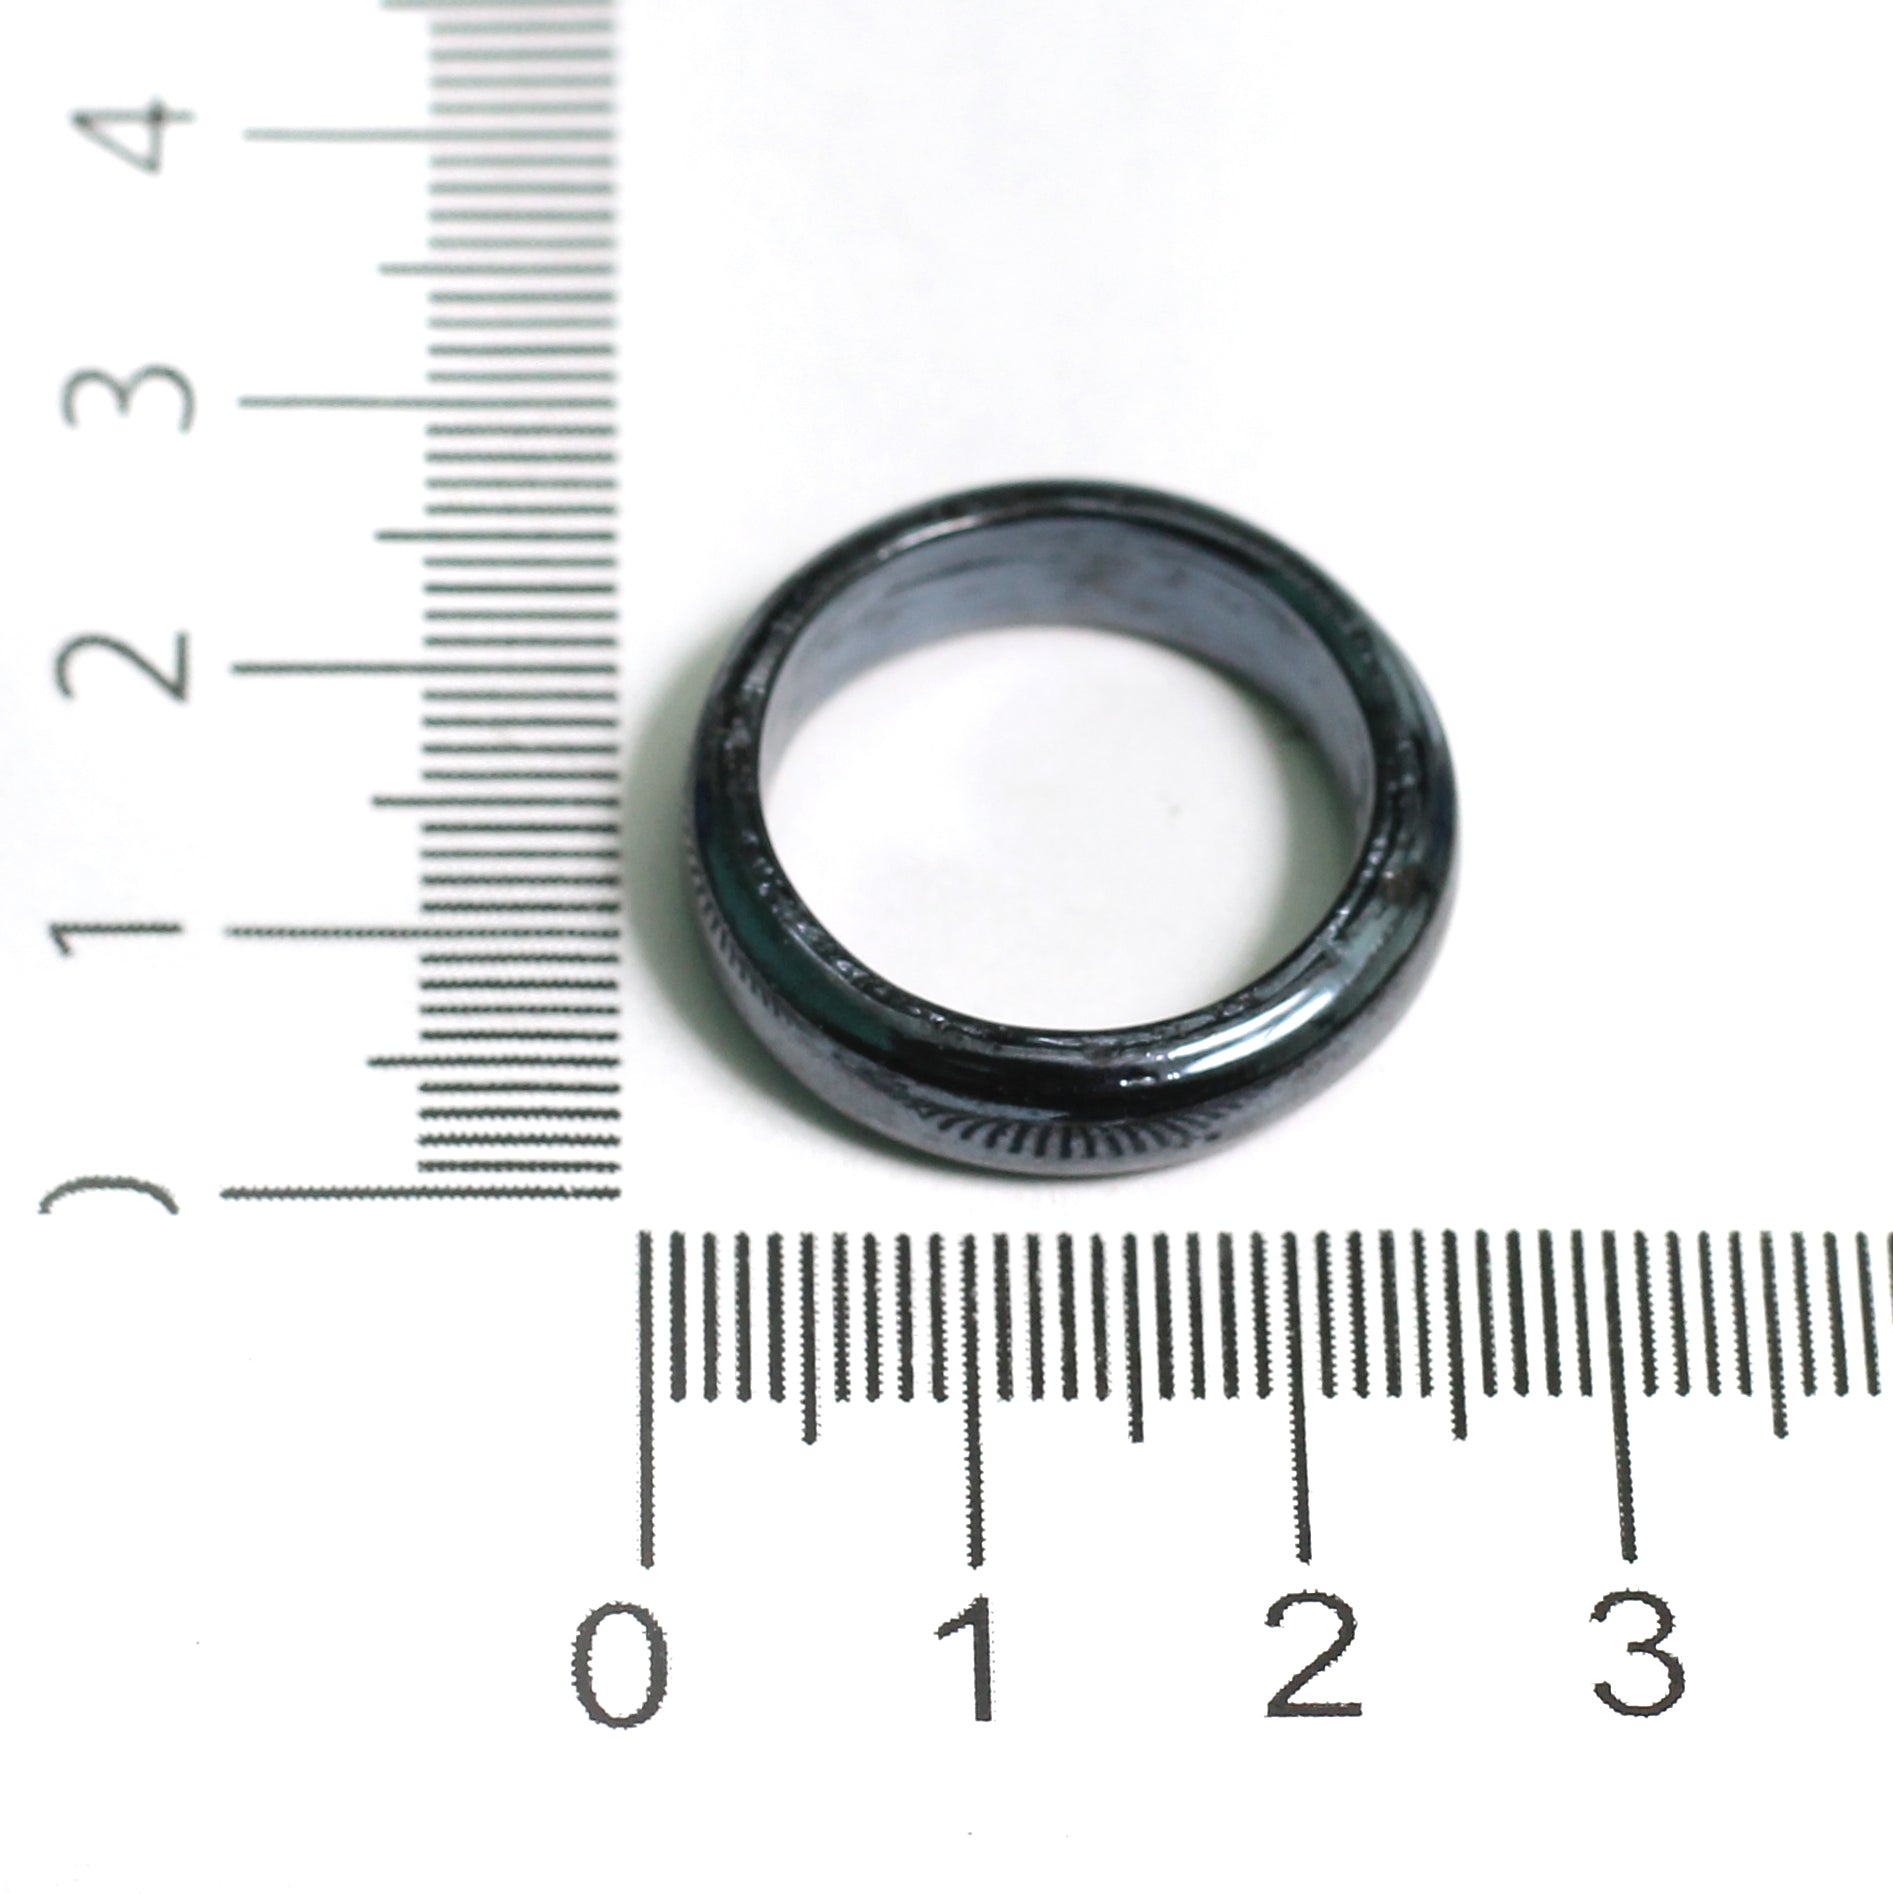 50 Pcs, Assorted Metallic black Glass Finger Rings